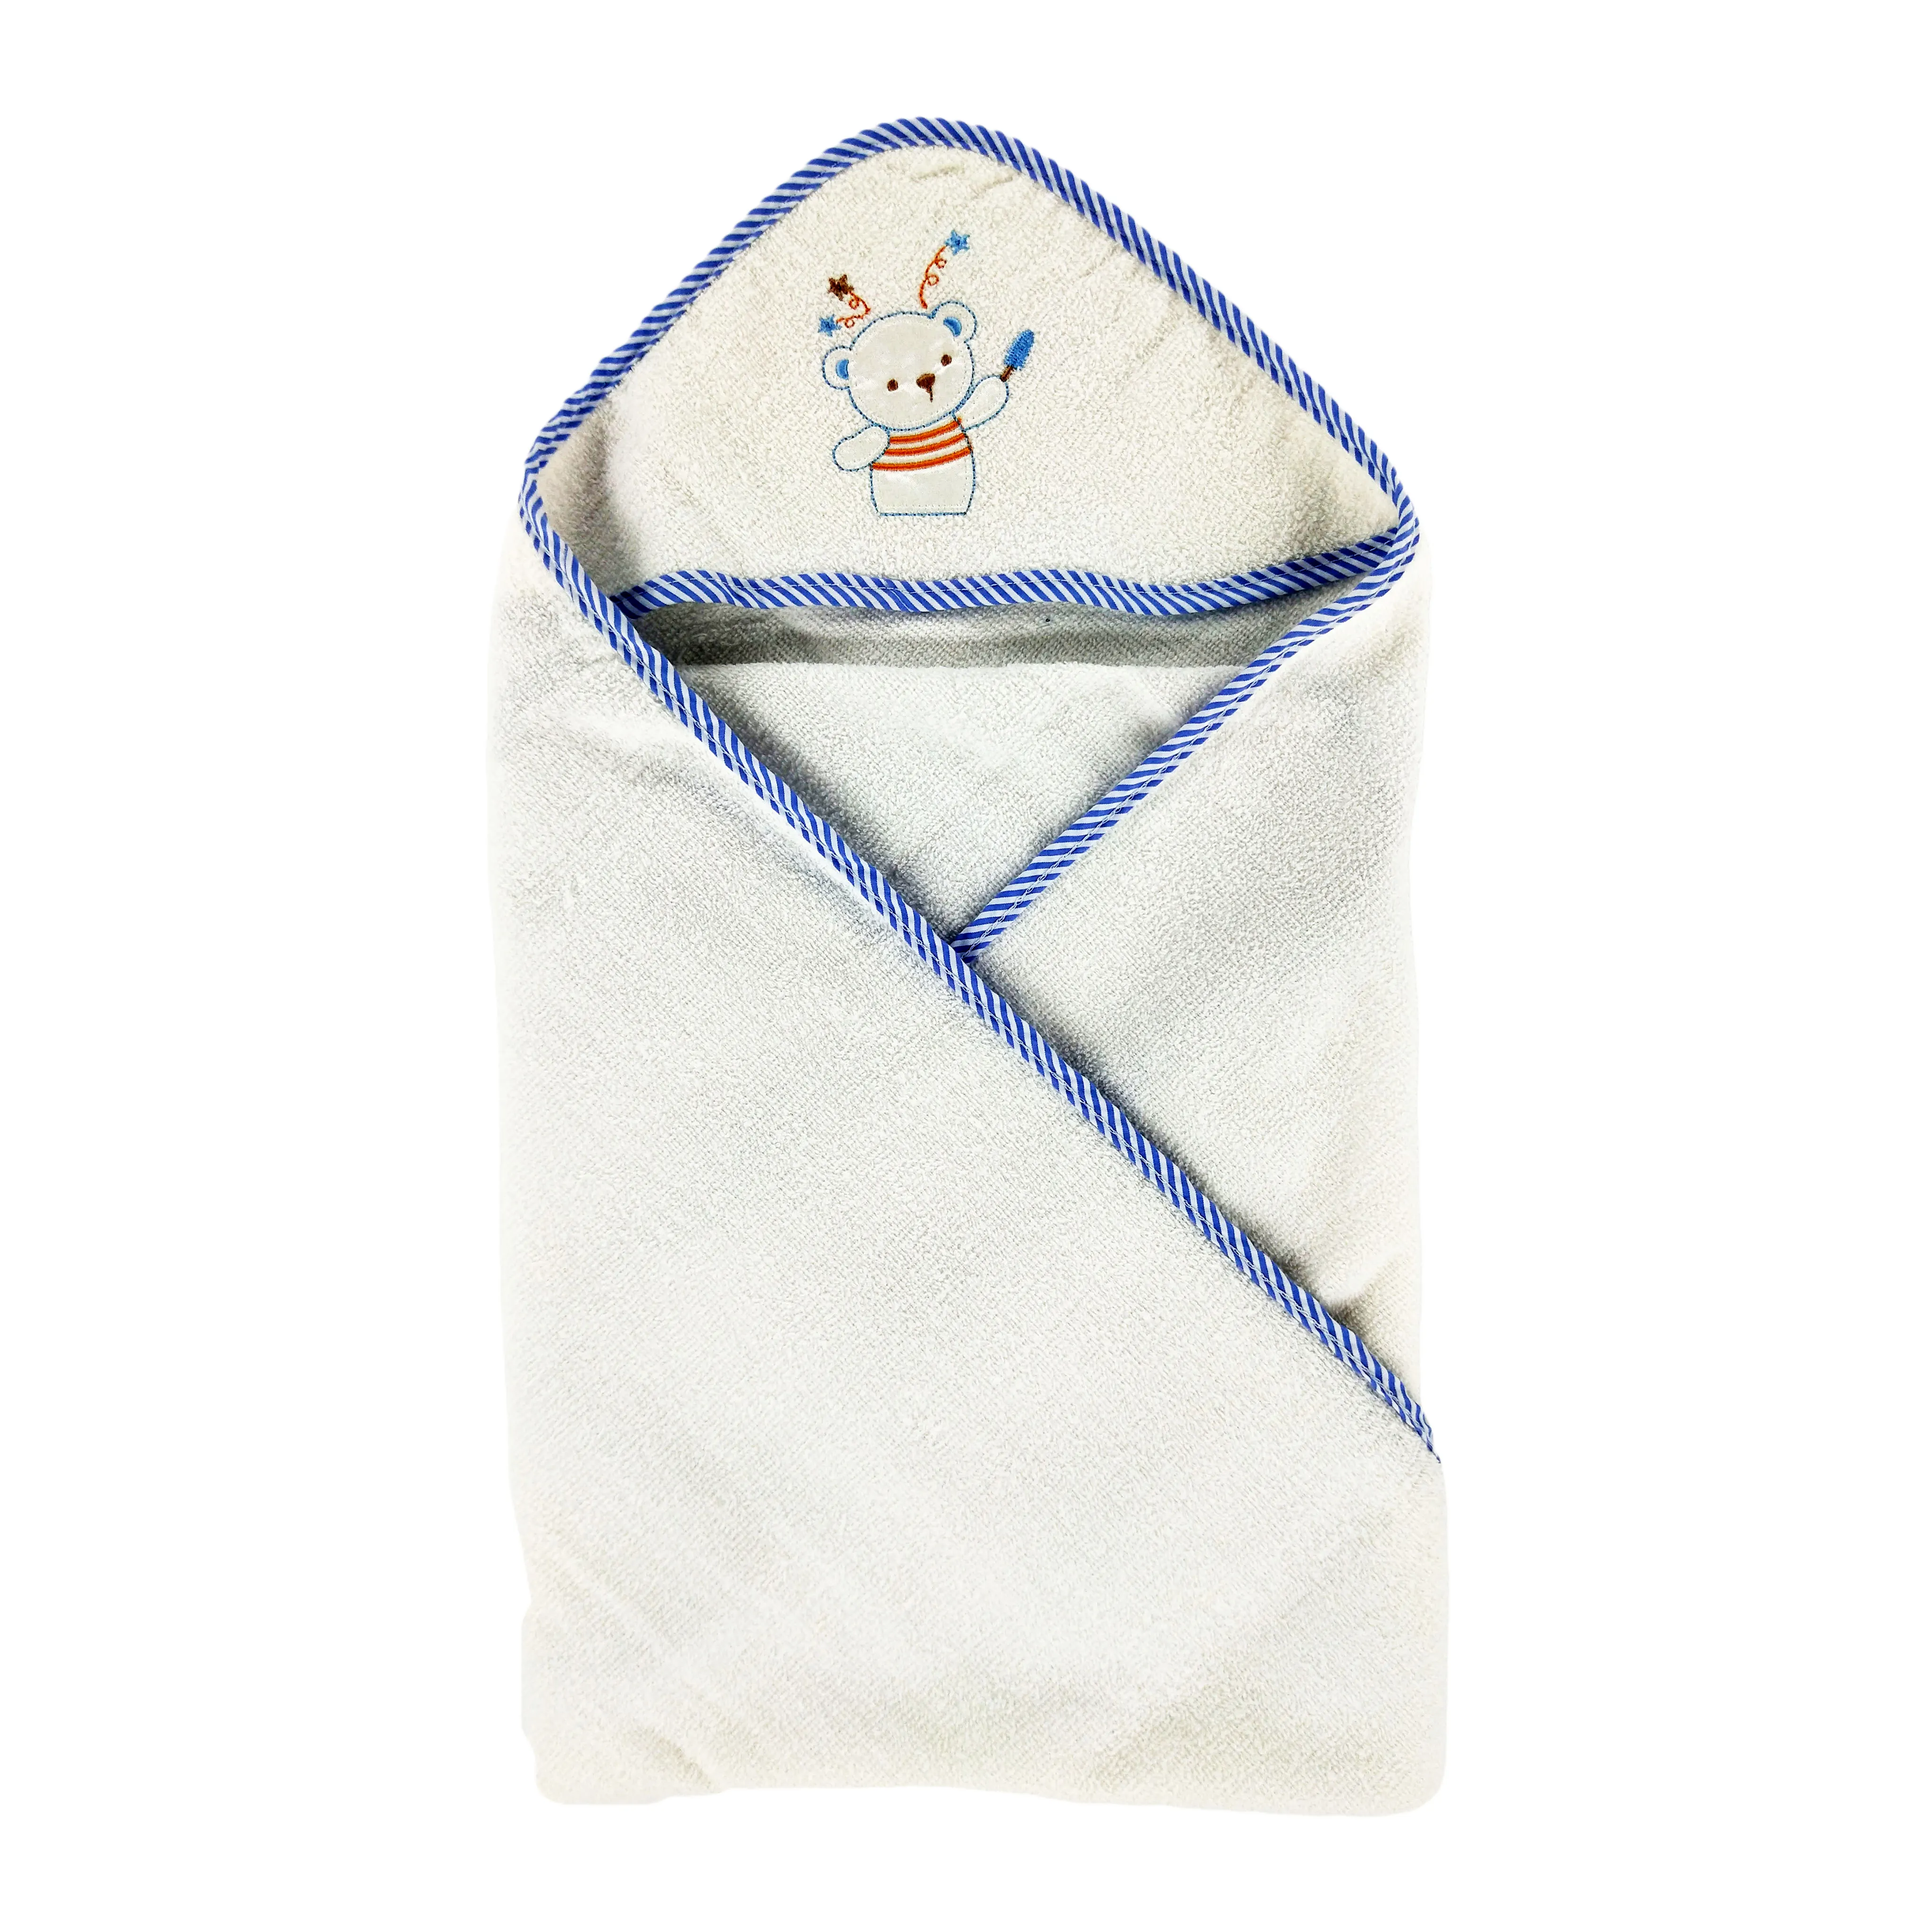 2020 warm 100% cotton baby kufala shower gear baby blanket